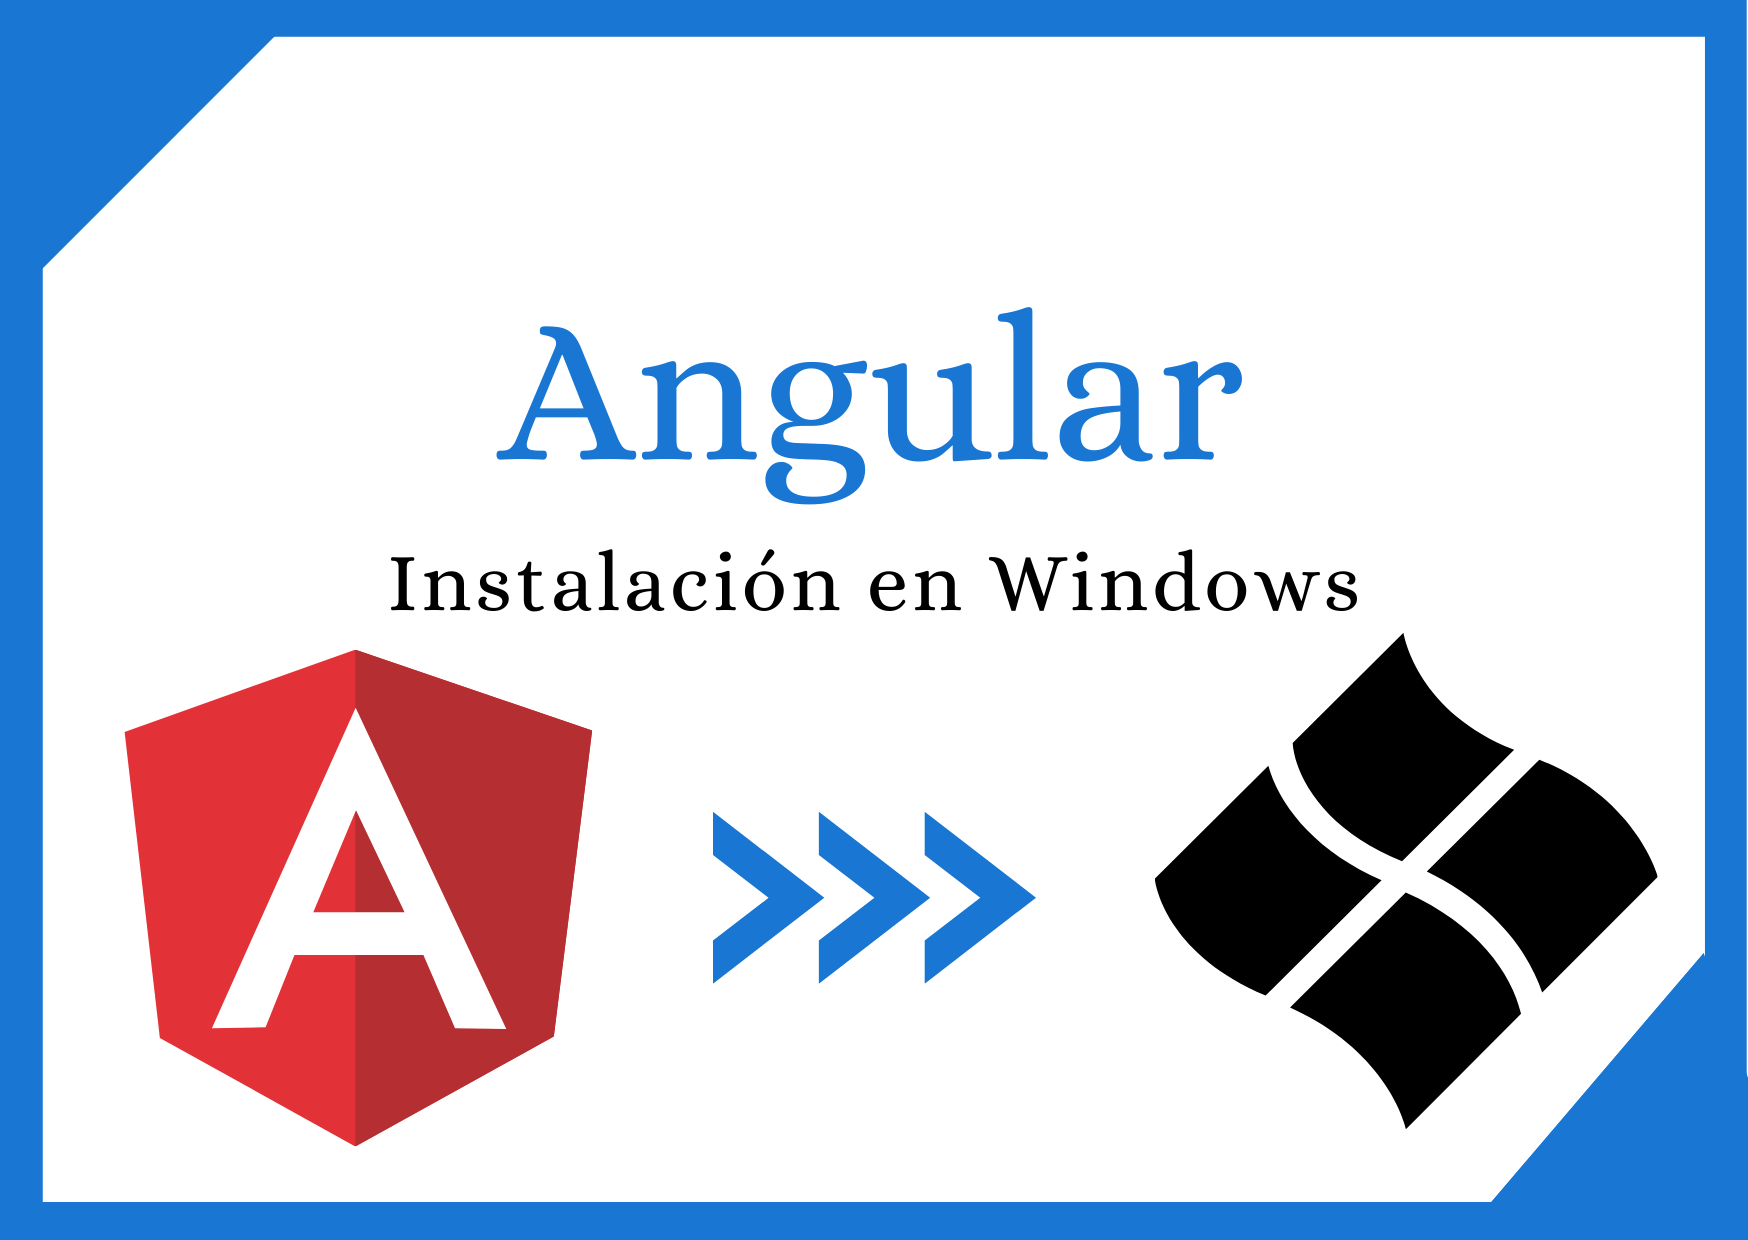 Instalación de angular en windows